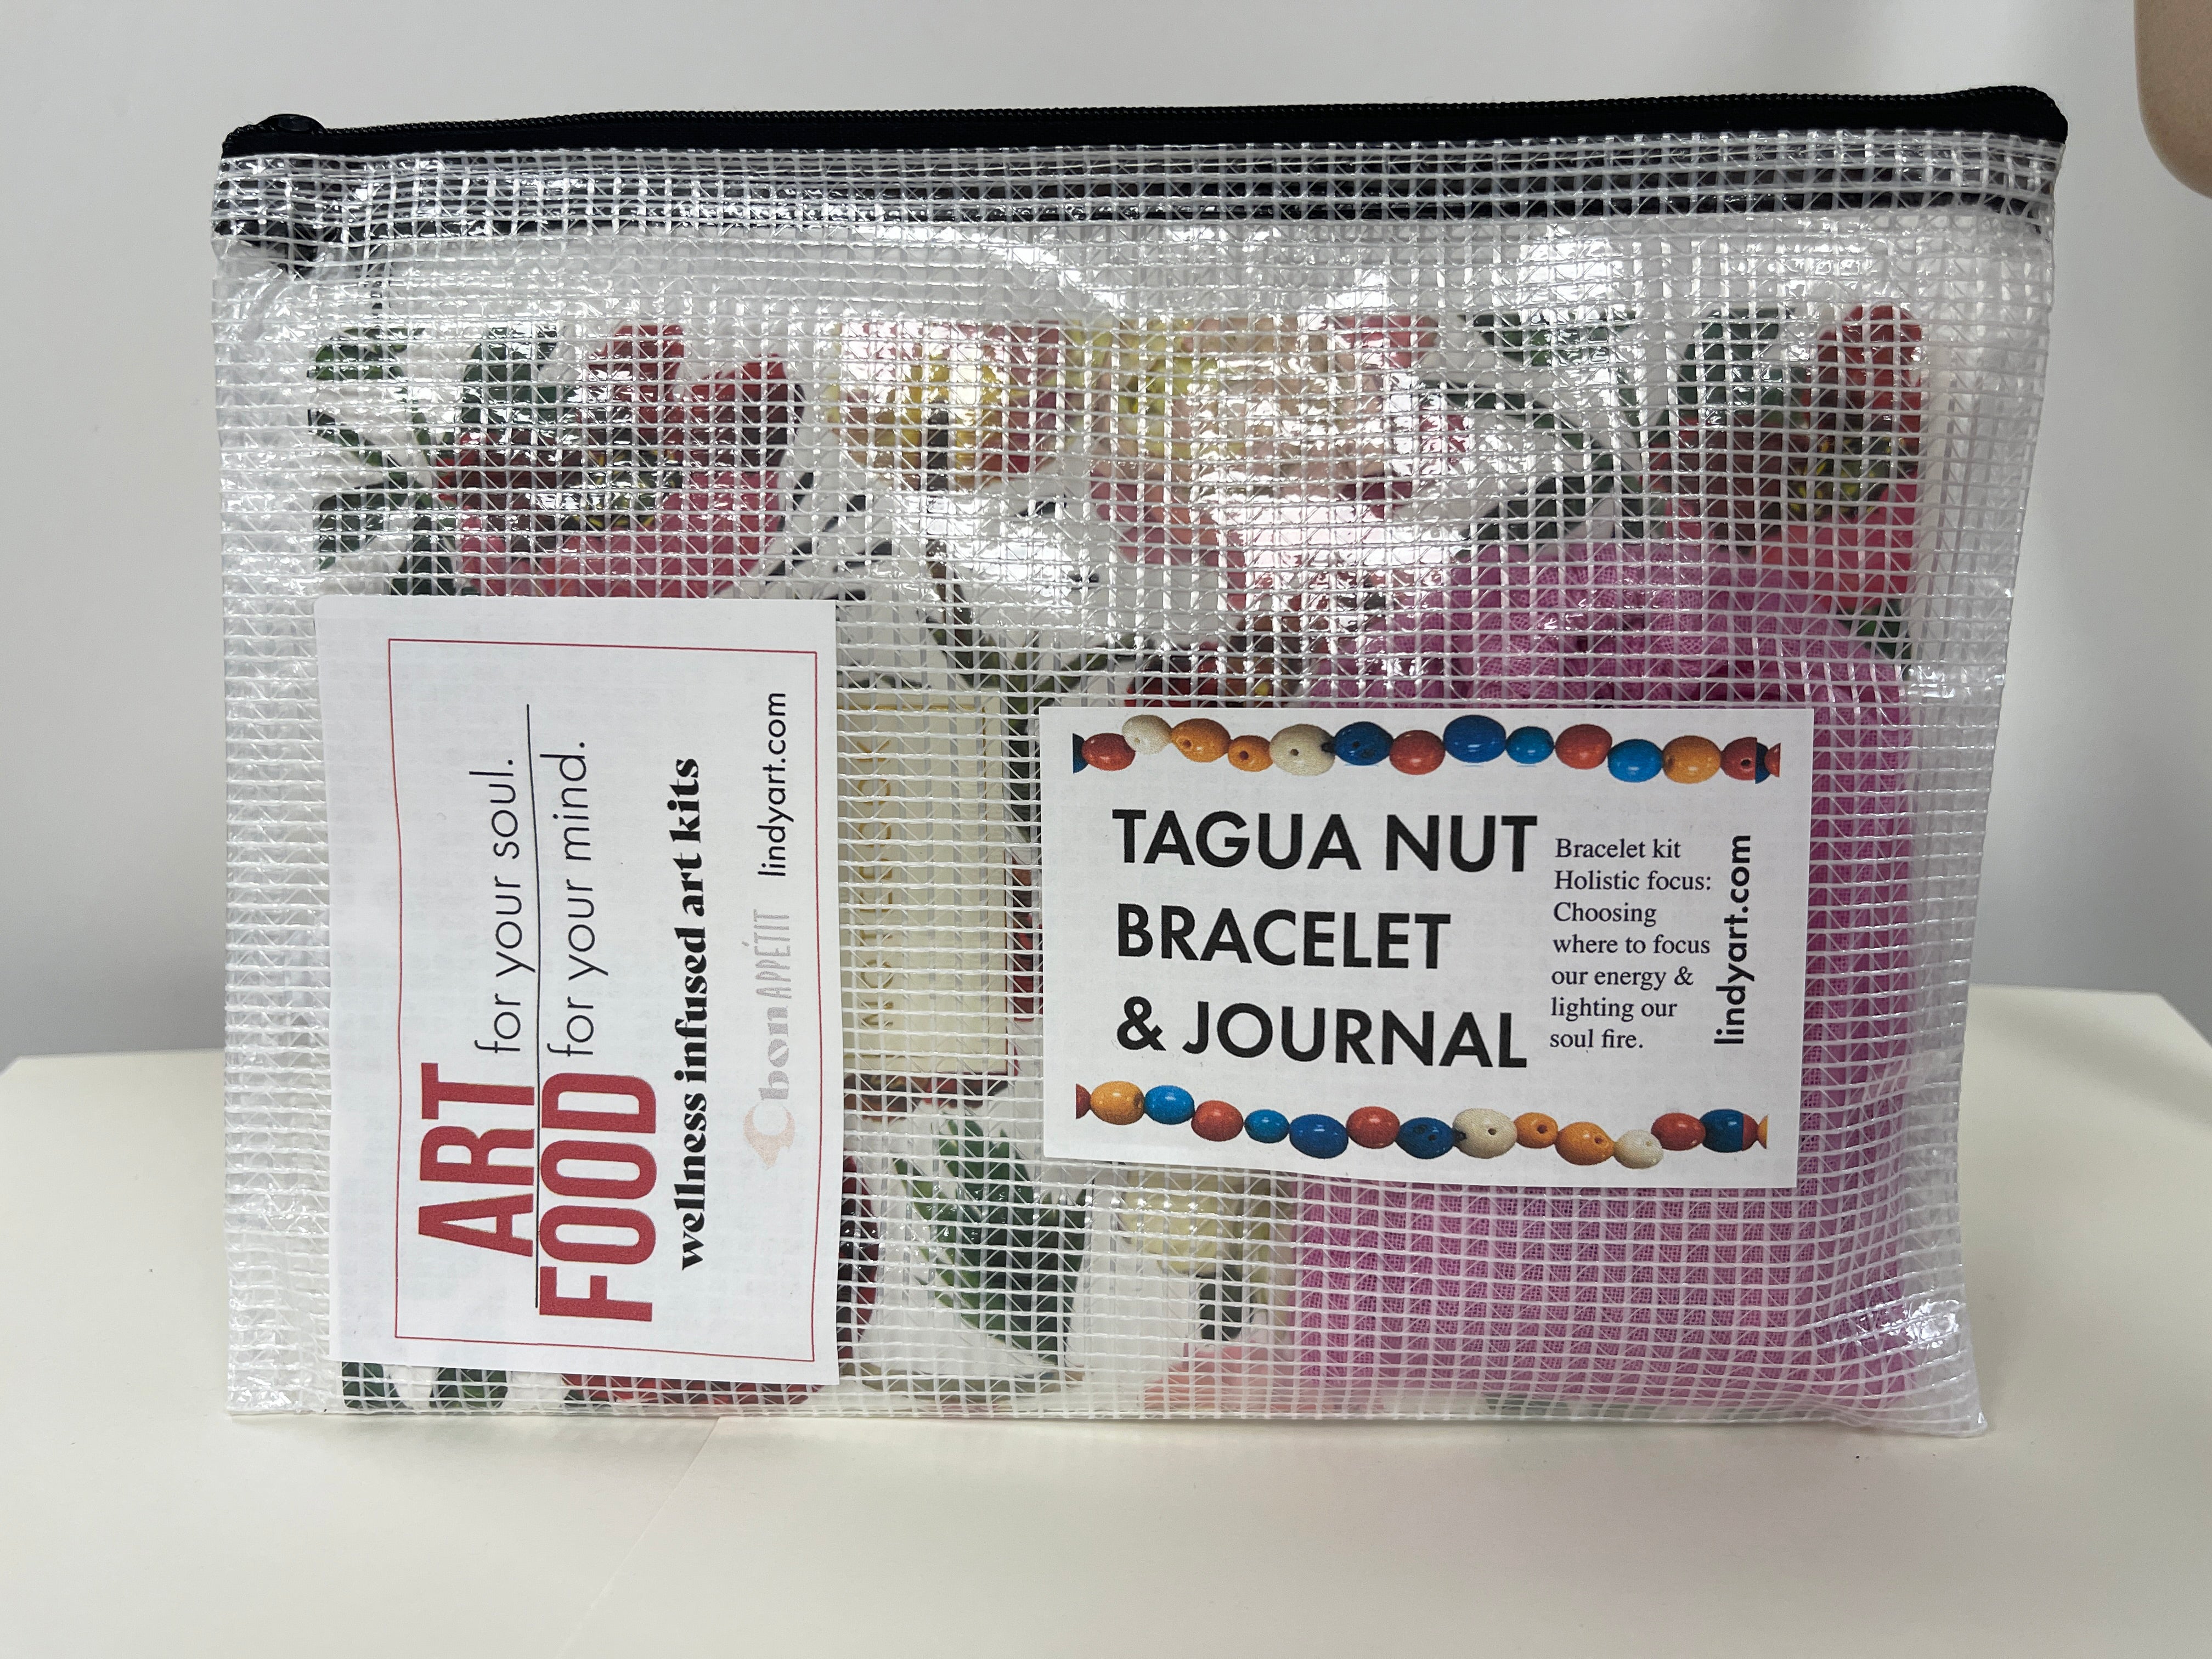 Tagua nut bracelet and journal kit